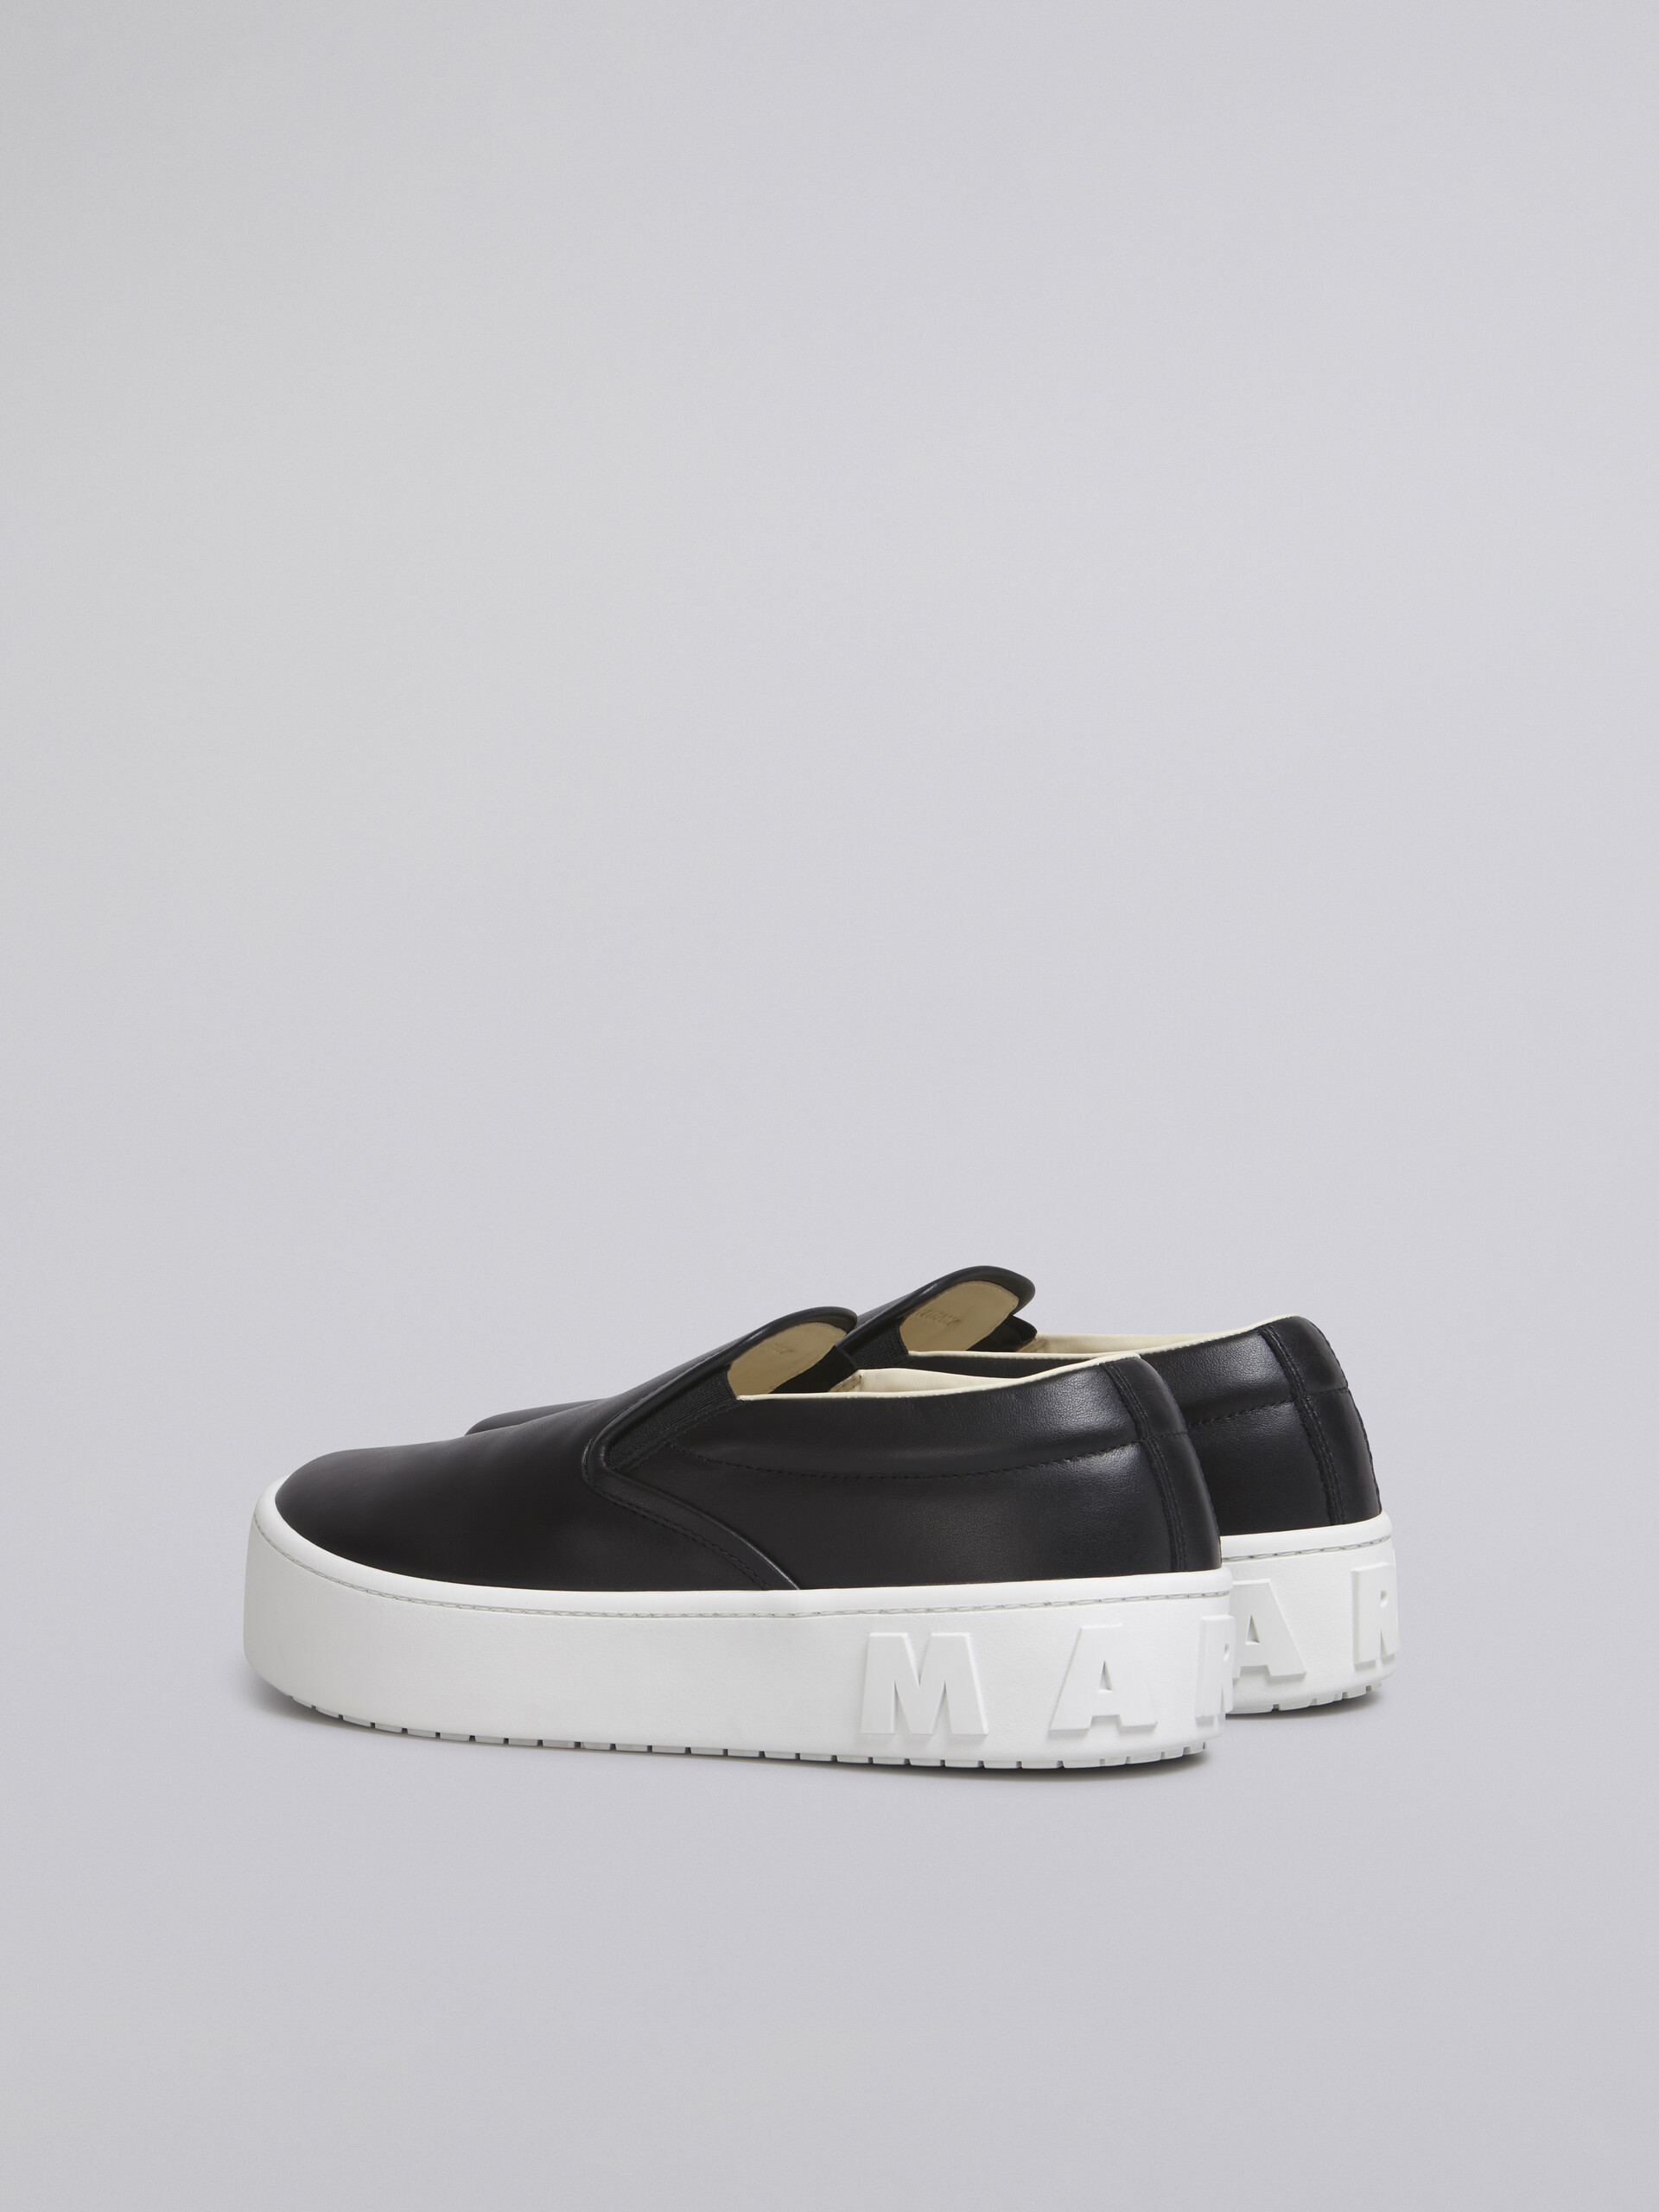 Black calfskin slip-on sneaker with raised maxi Marni logo - Sneakers - Image 3